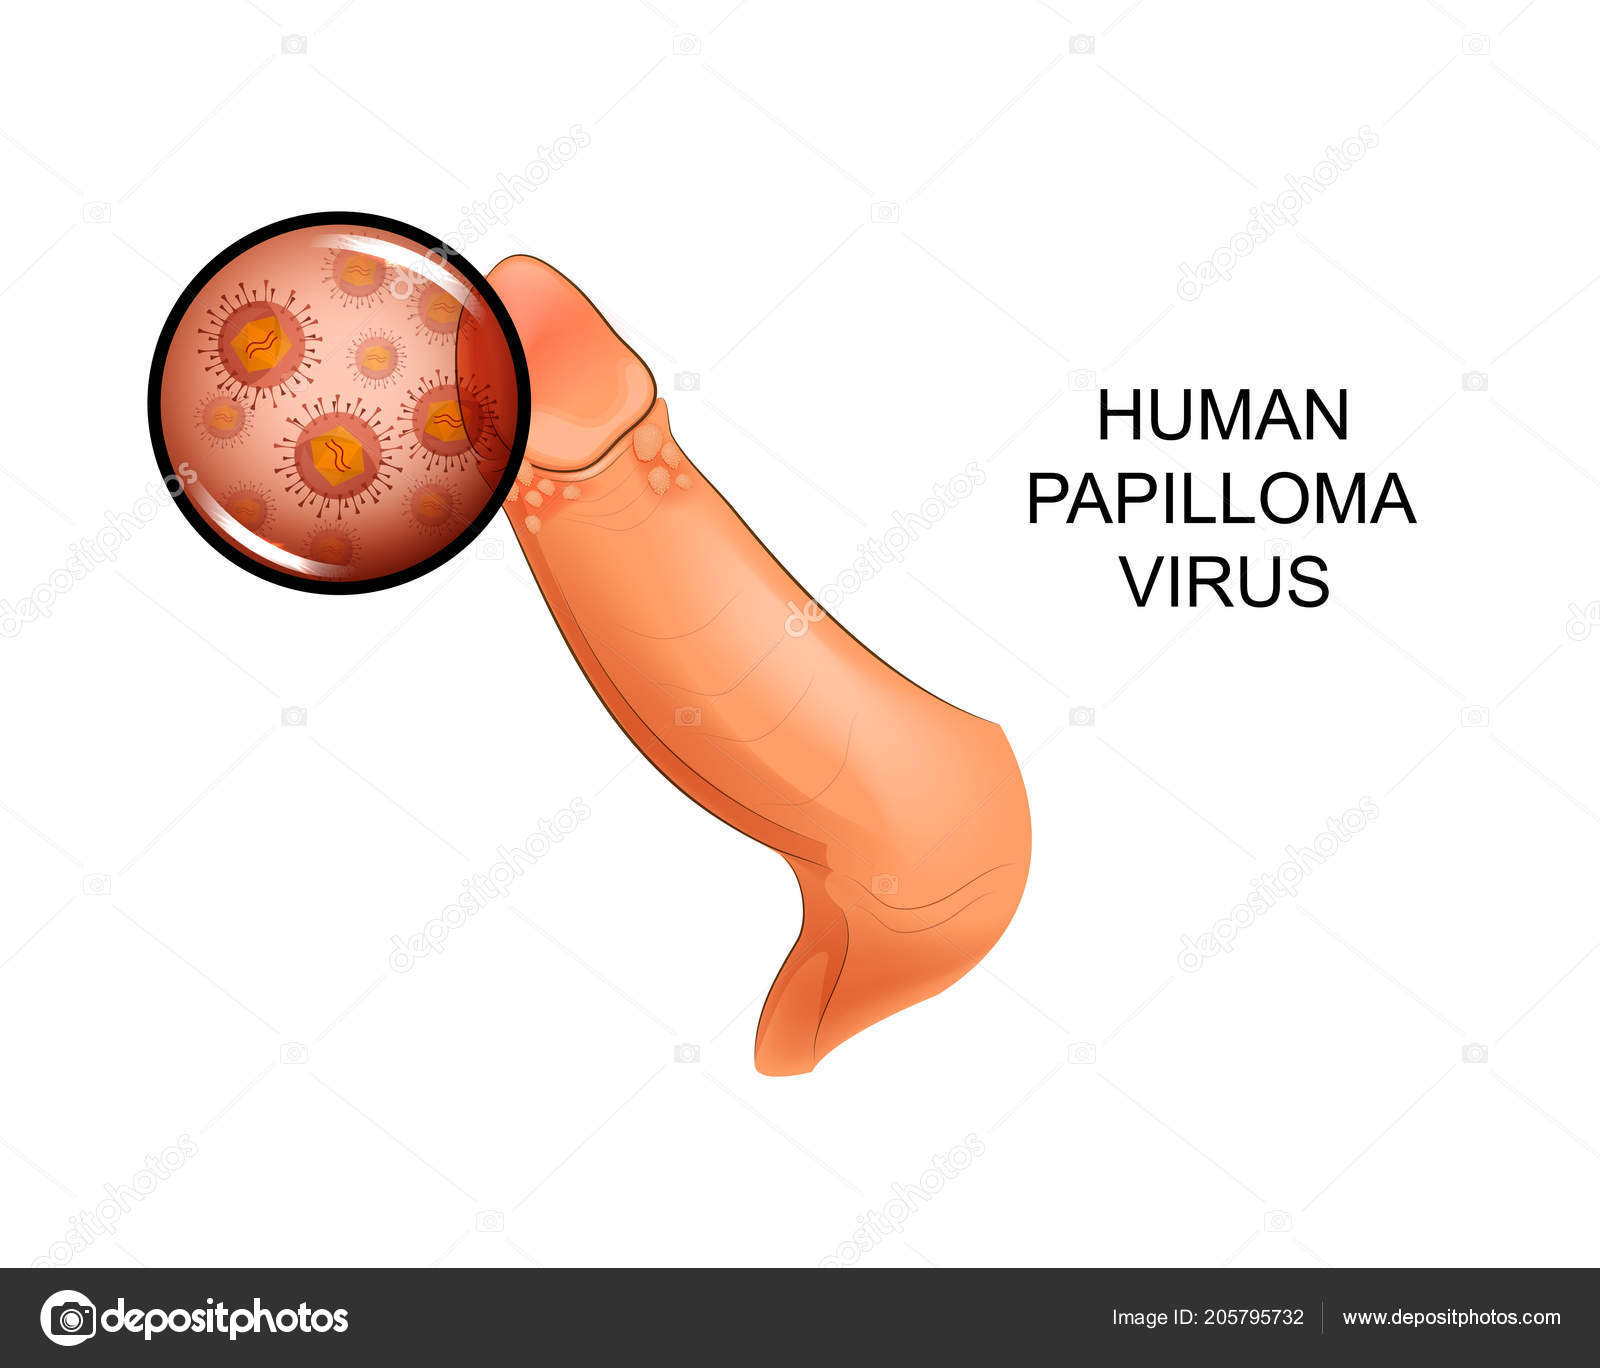 Human papilloma symptoms